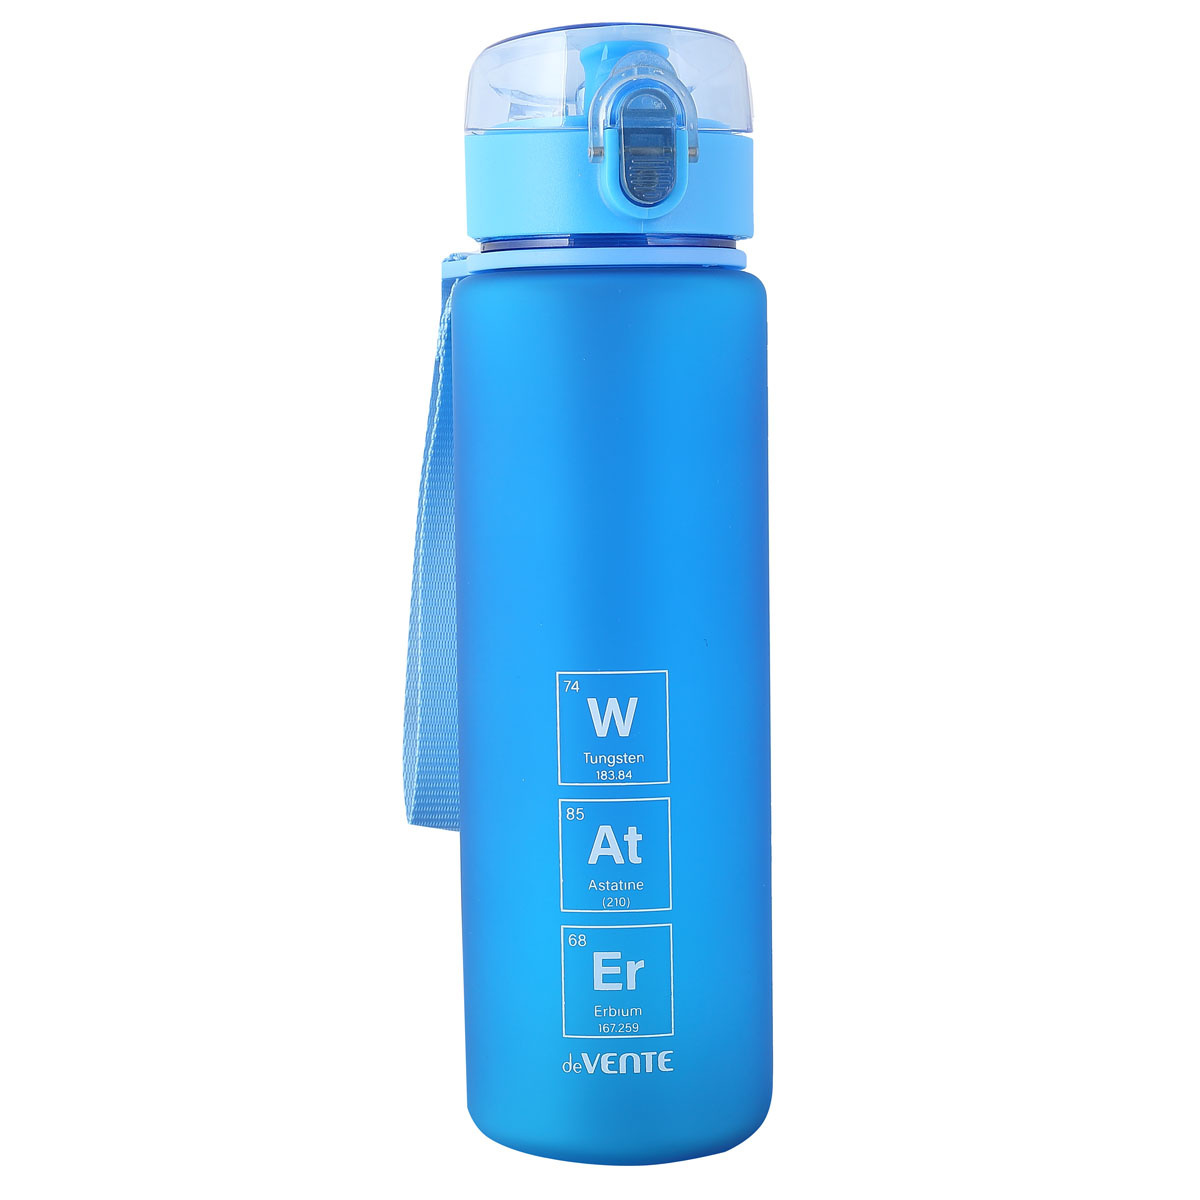 Синяя вода купить. Канц бутылочка для воды, 560 мл. "Water" пластик,синяя (DEVENTE) 8090942. S-Tamara 560 ml бутылка. DEVENTE бутылка для воды синяя. Синяя пластиковая бутылка.